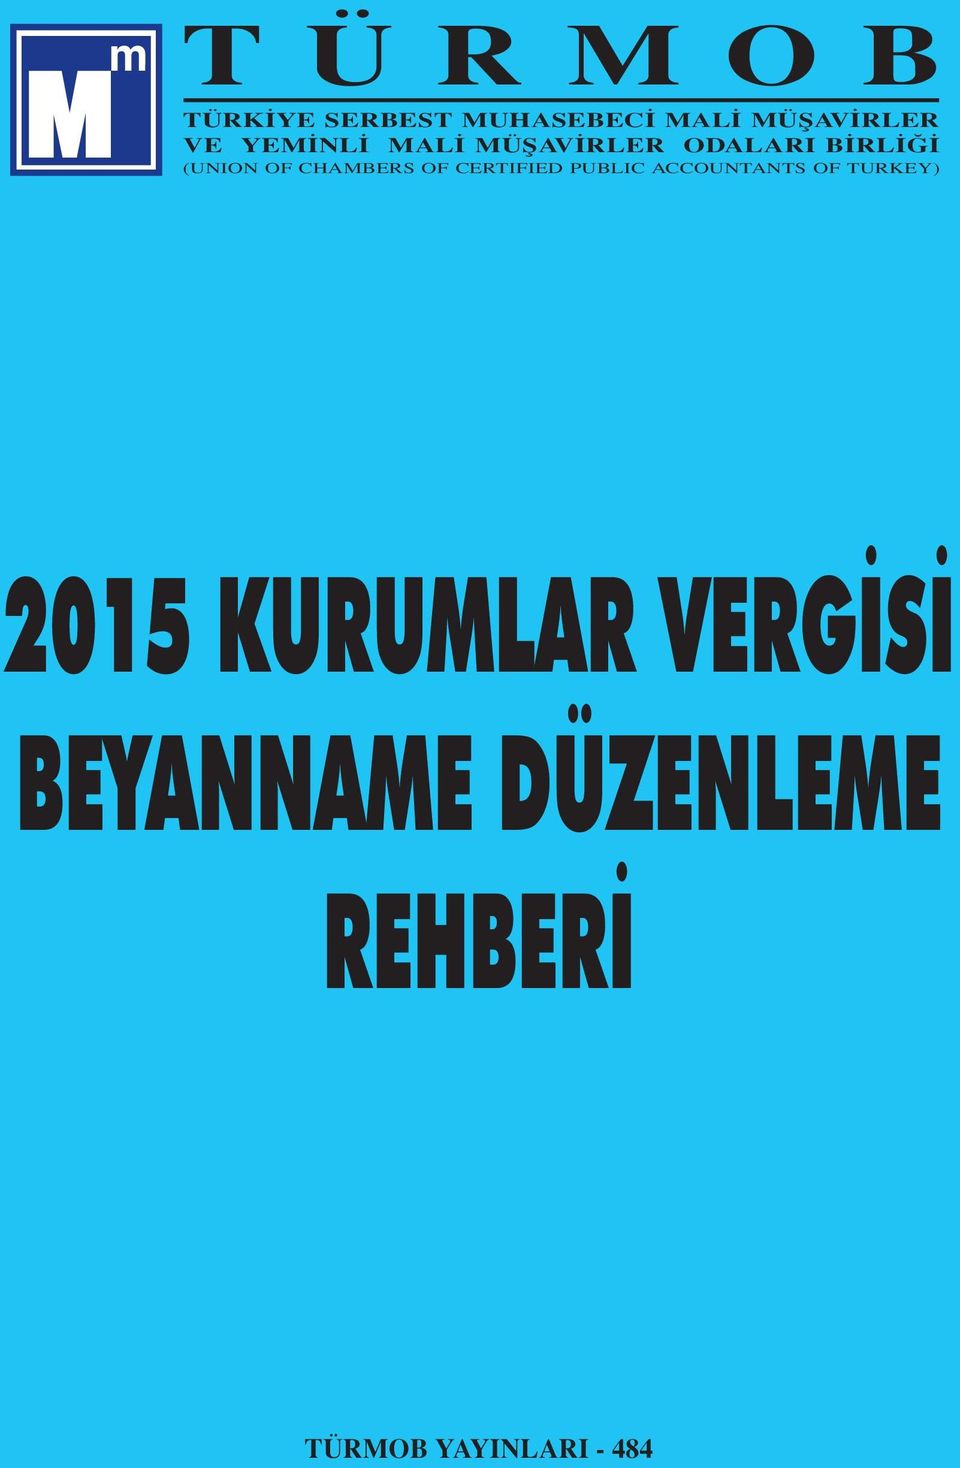 OF CERTIFIED PUBLIC ACCOUNTANTS OF TURKEY) 2015 KURUMLAR